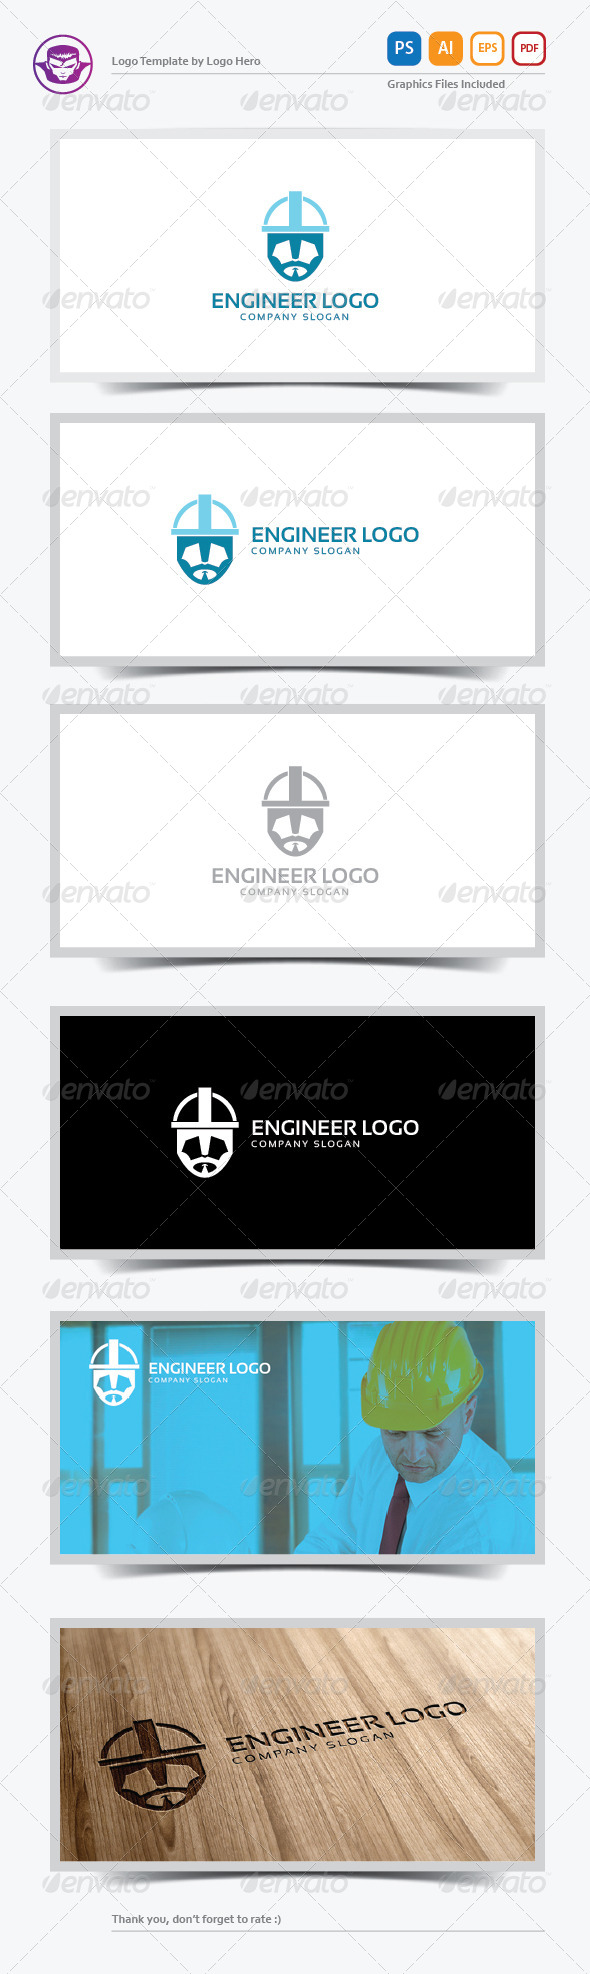 Engineer Logo Template